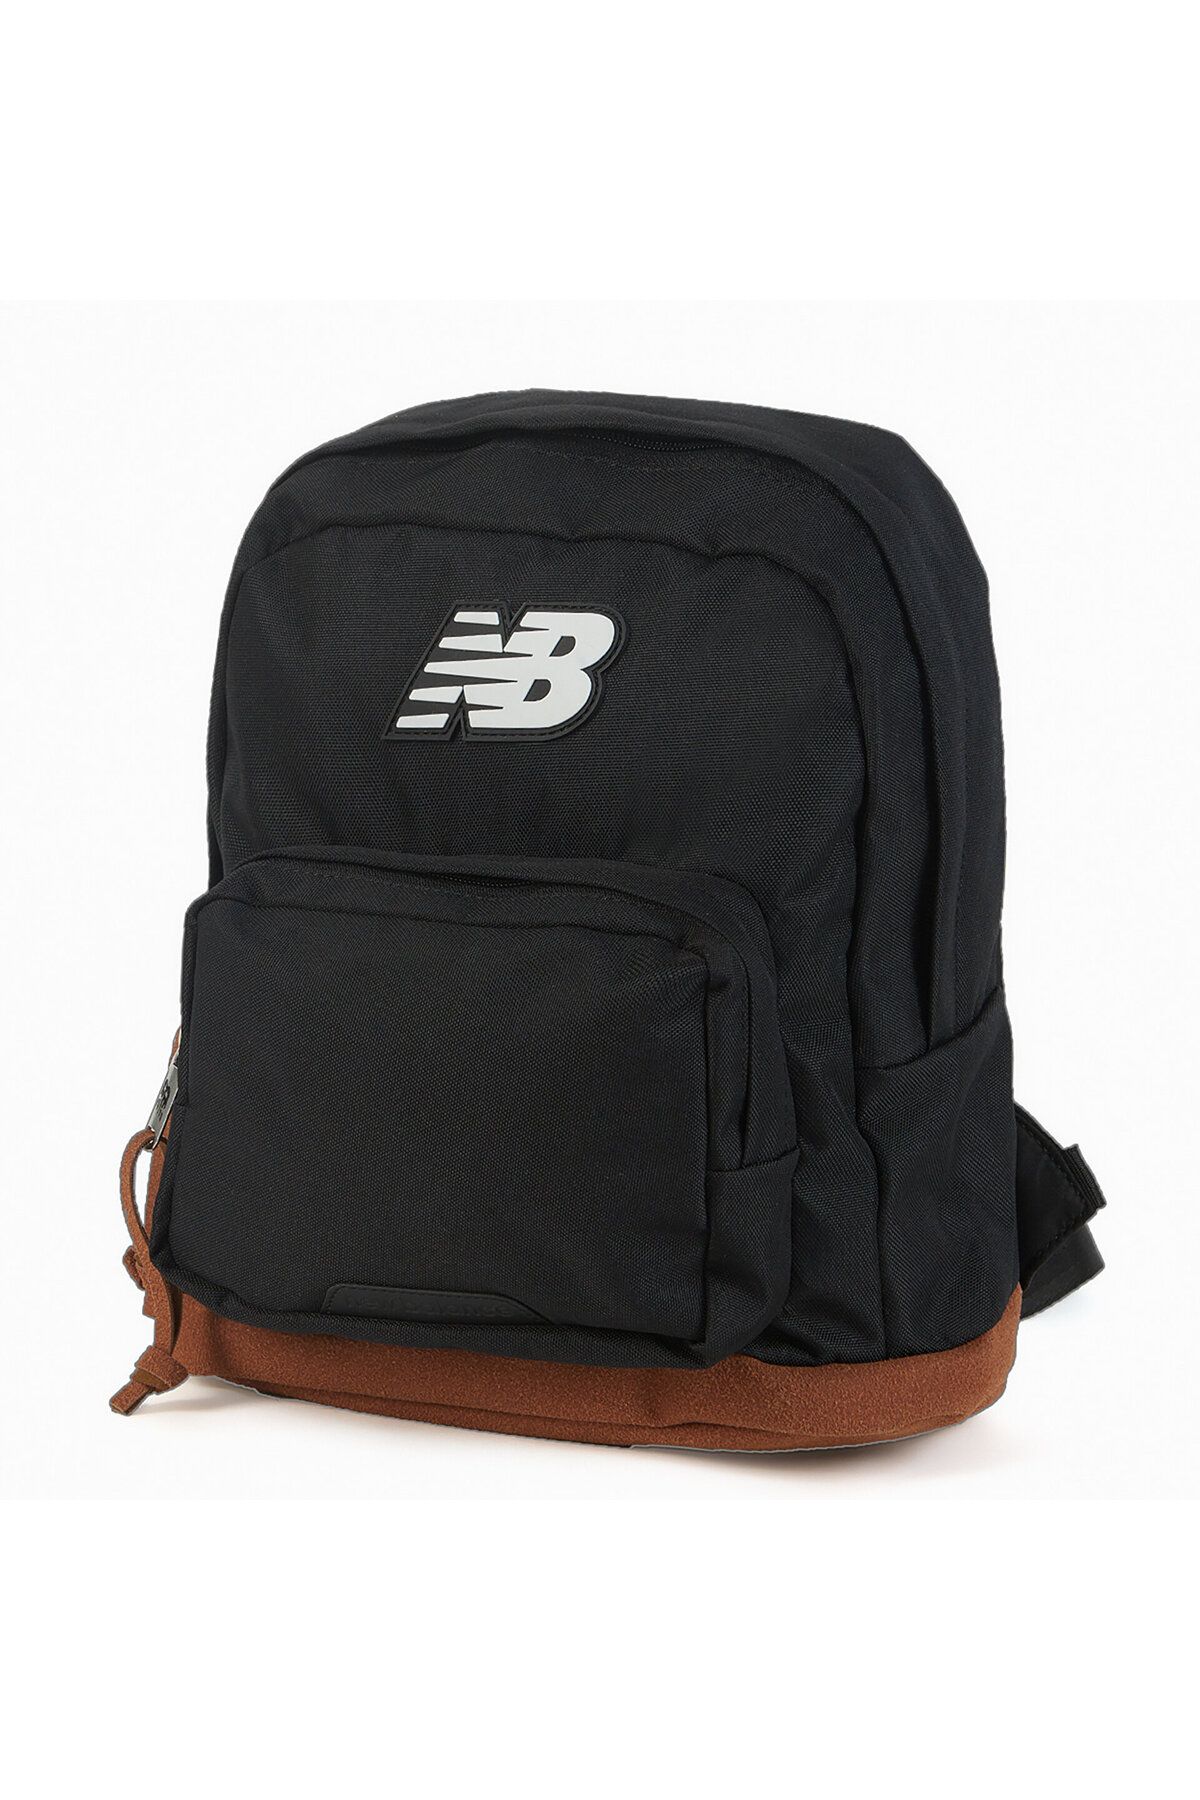 New Balance Mini Backpack Sırt Çantası Anb3201-bk